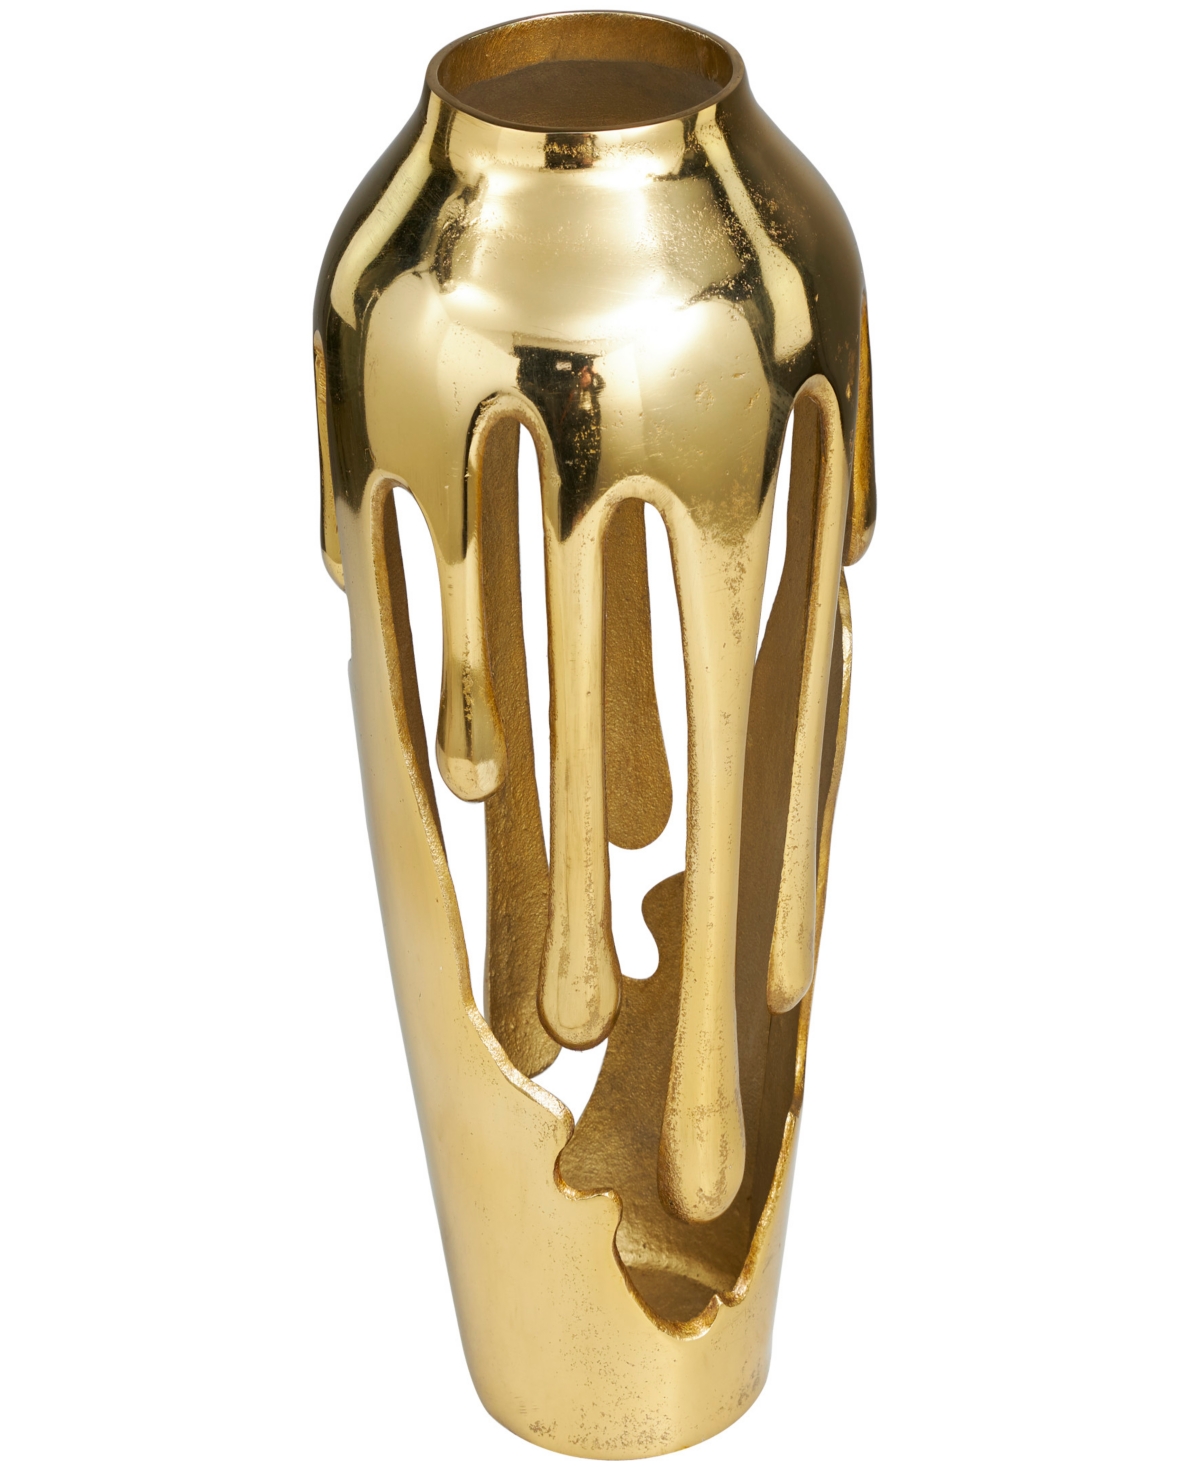 Rosemary Lane Aluminum Drip Vase With Melting Designed Body, 7" X 7" X 15" In Gold